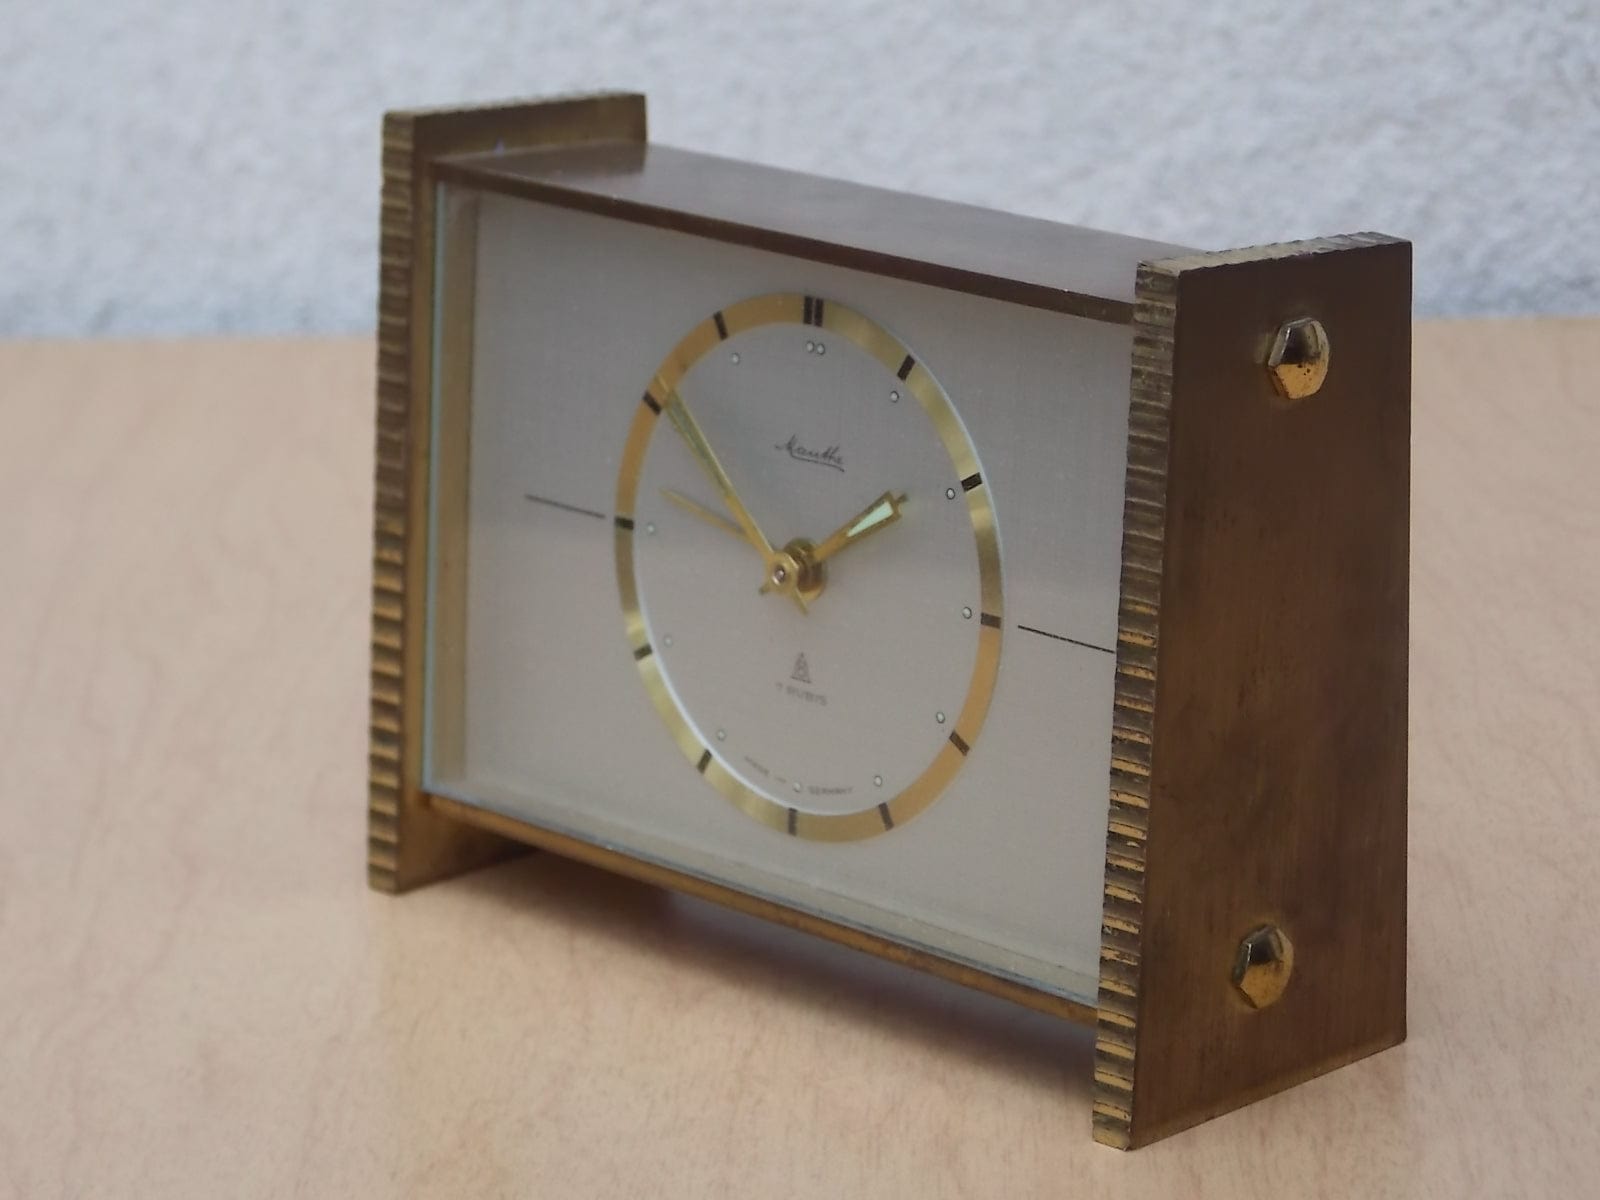 I Like Mike's Mid Century Modern Clock Mauthe Small Modern Brass Mantle Alarm Clock, German Made